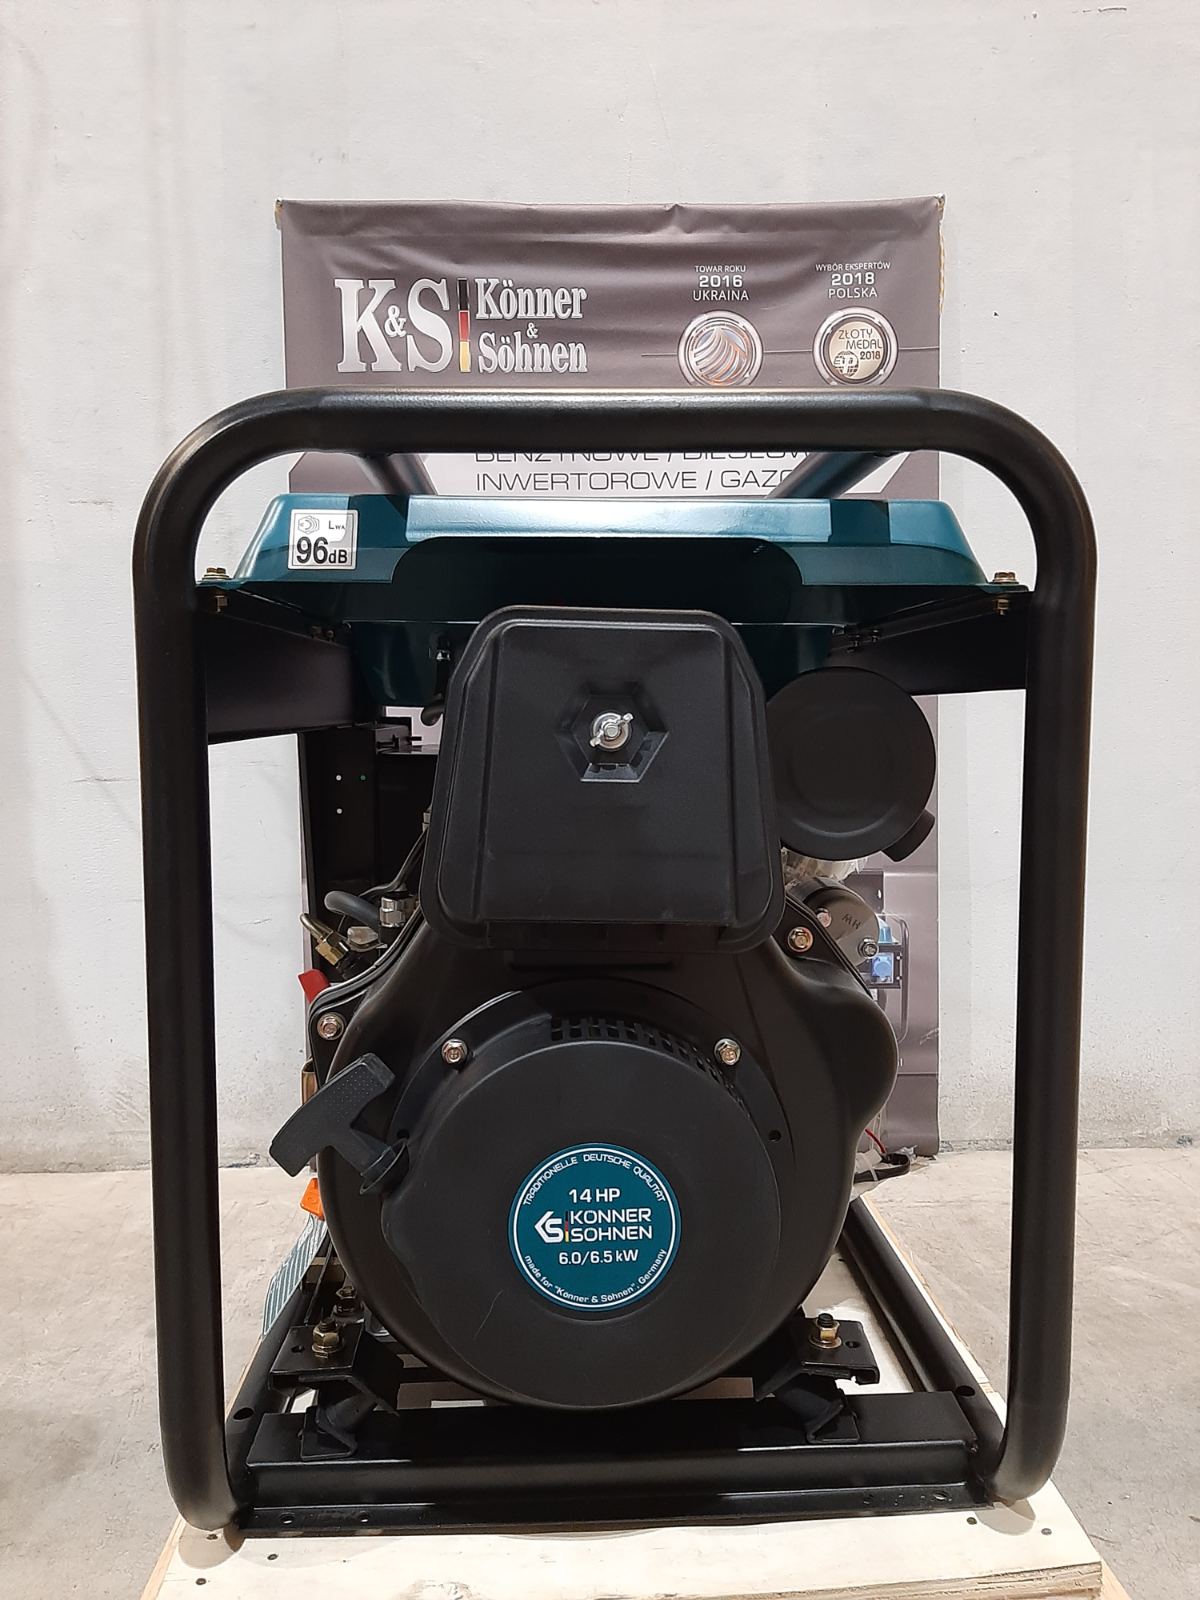 Diesel generator KS 8100HDE (EURO V) (Id 1002)